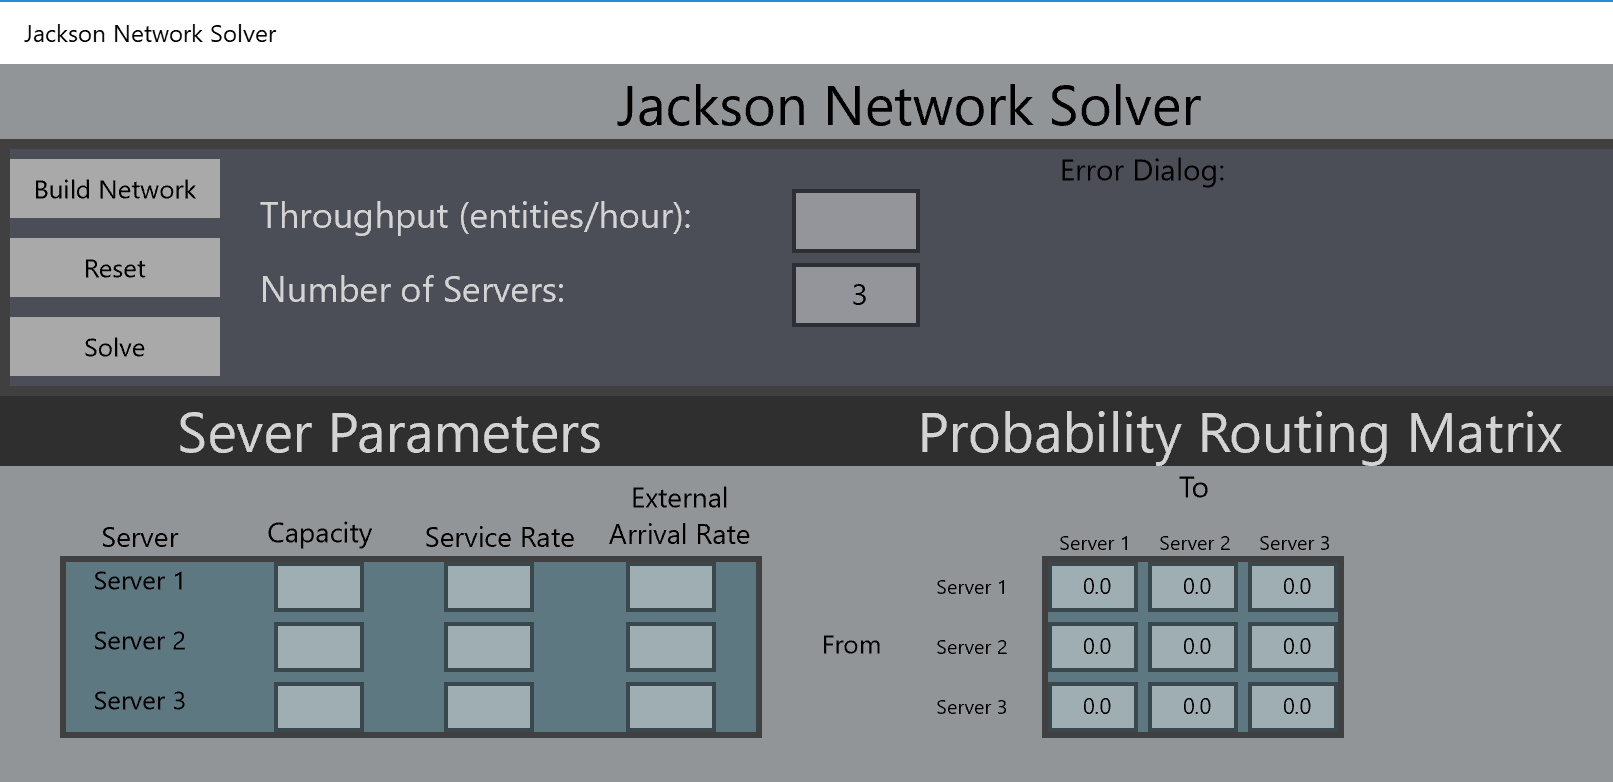 Example - 3 Server Network